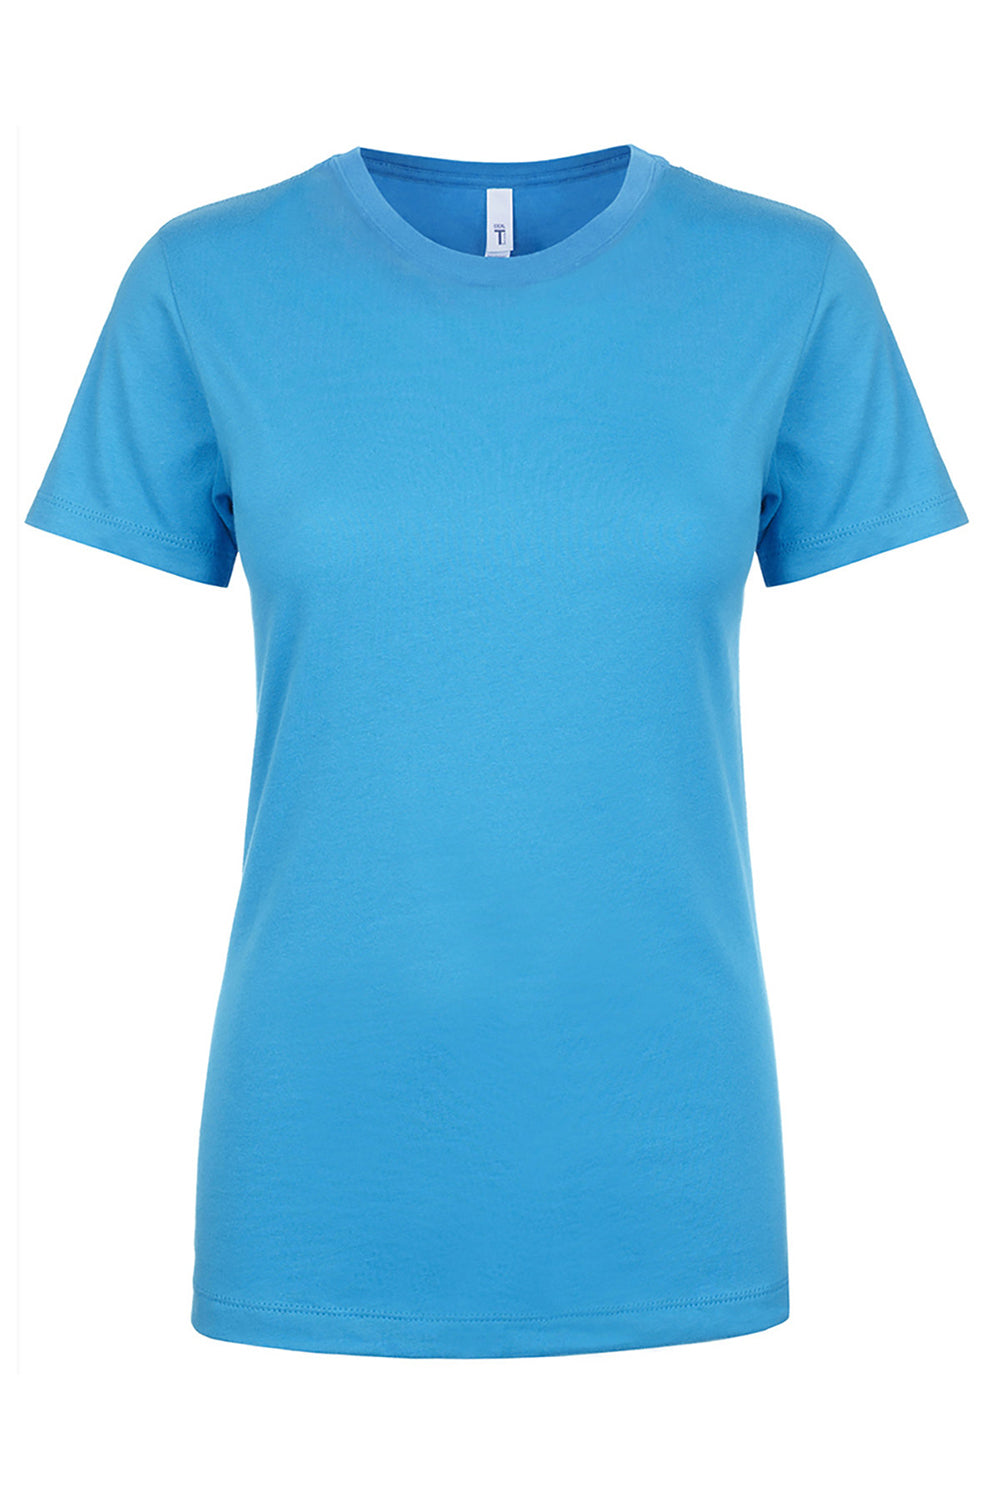 Next Level N1510/1510 Womens Ideal Jersey Short Sleeve Crewneck T-Shirt Turquoise Blue Flat Front